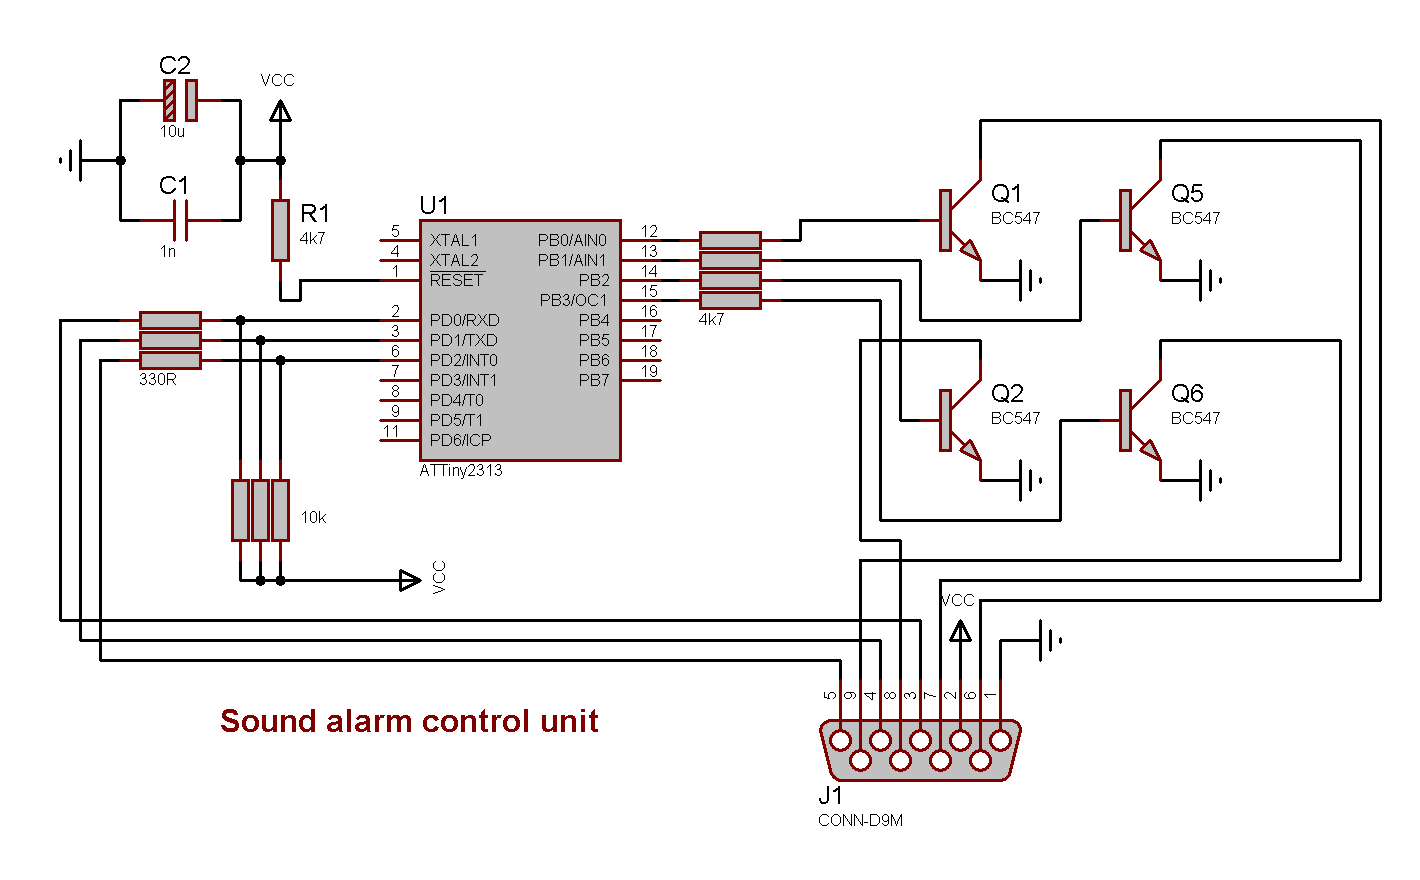 Schematics for the sound alarm controller